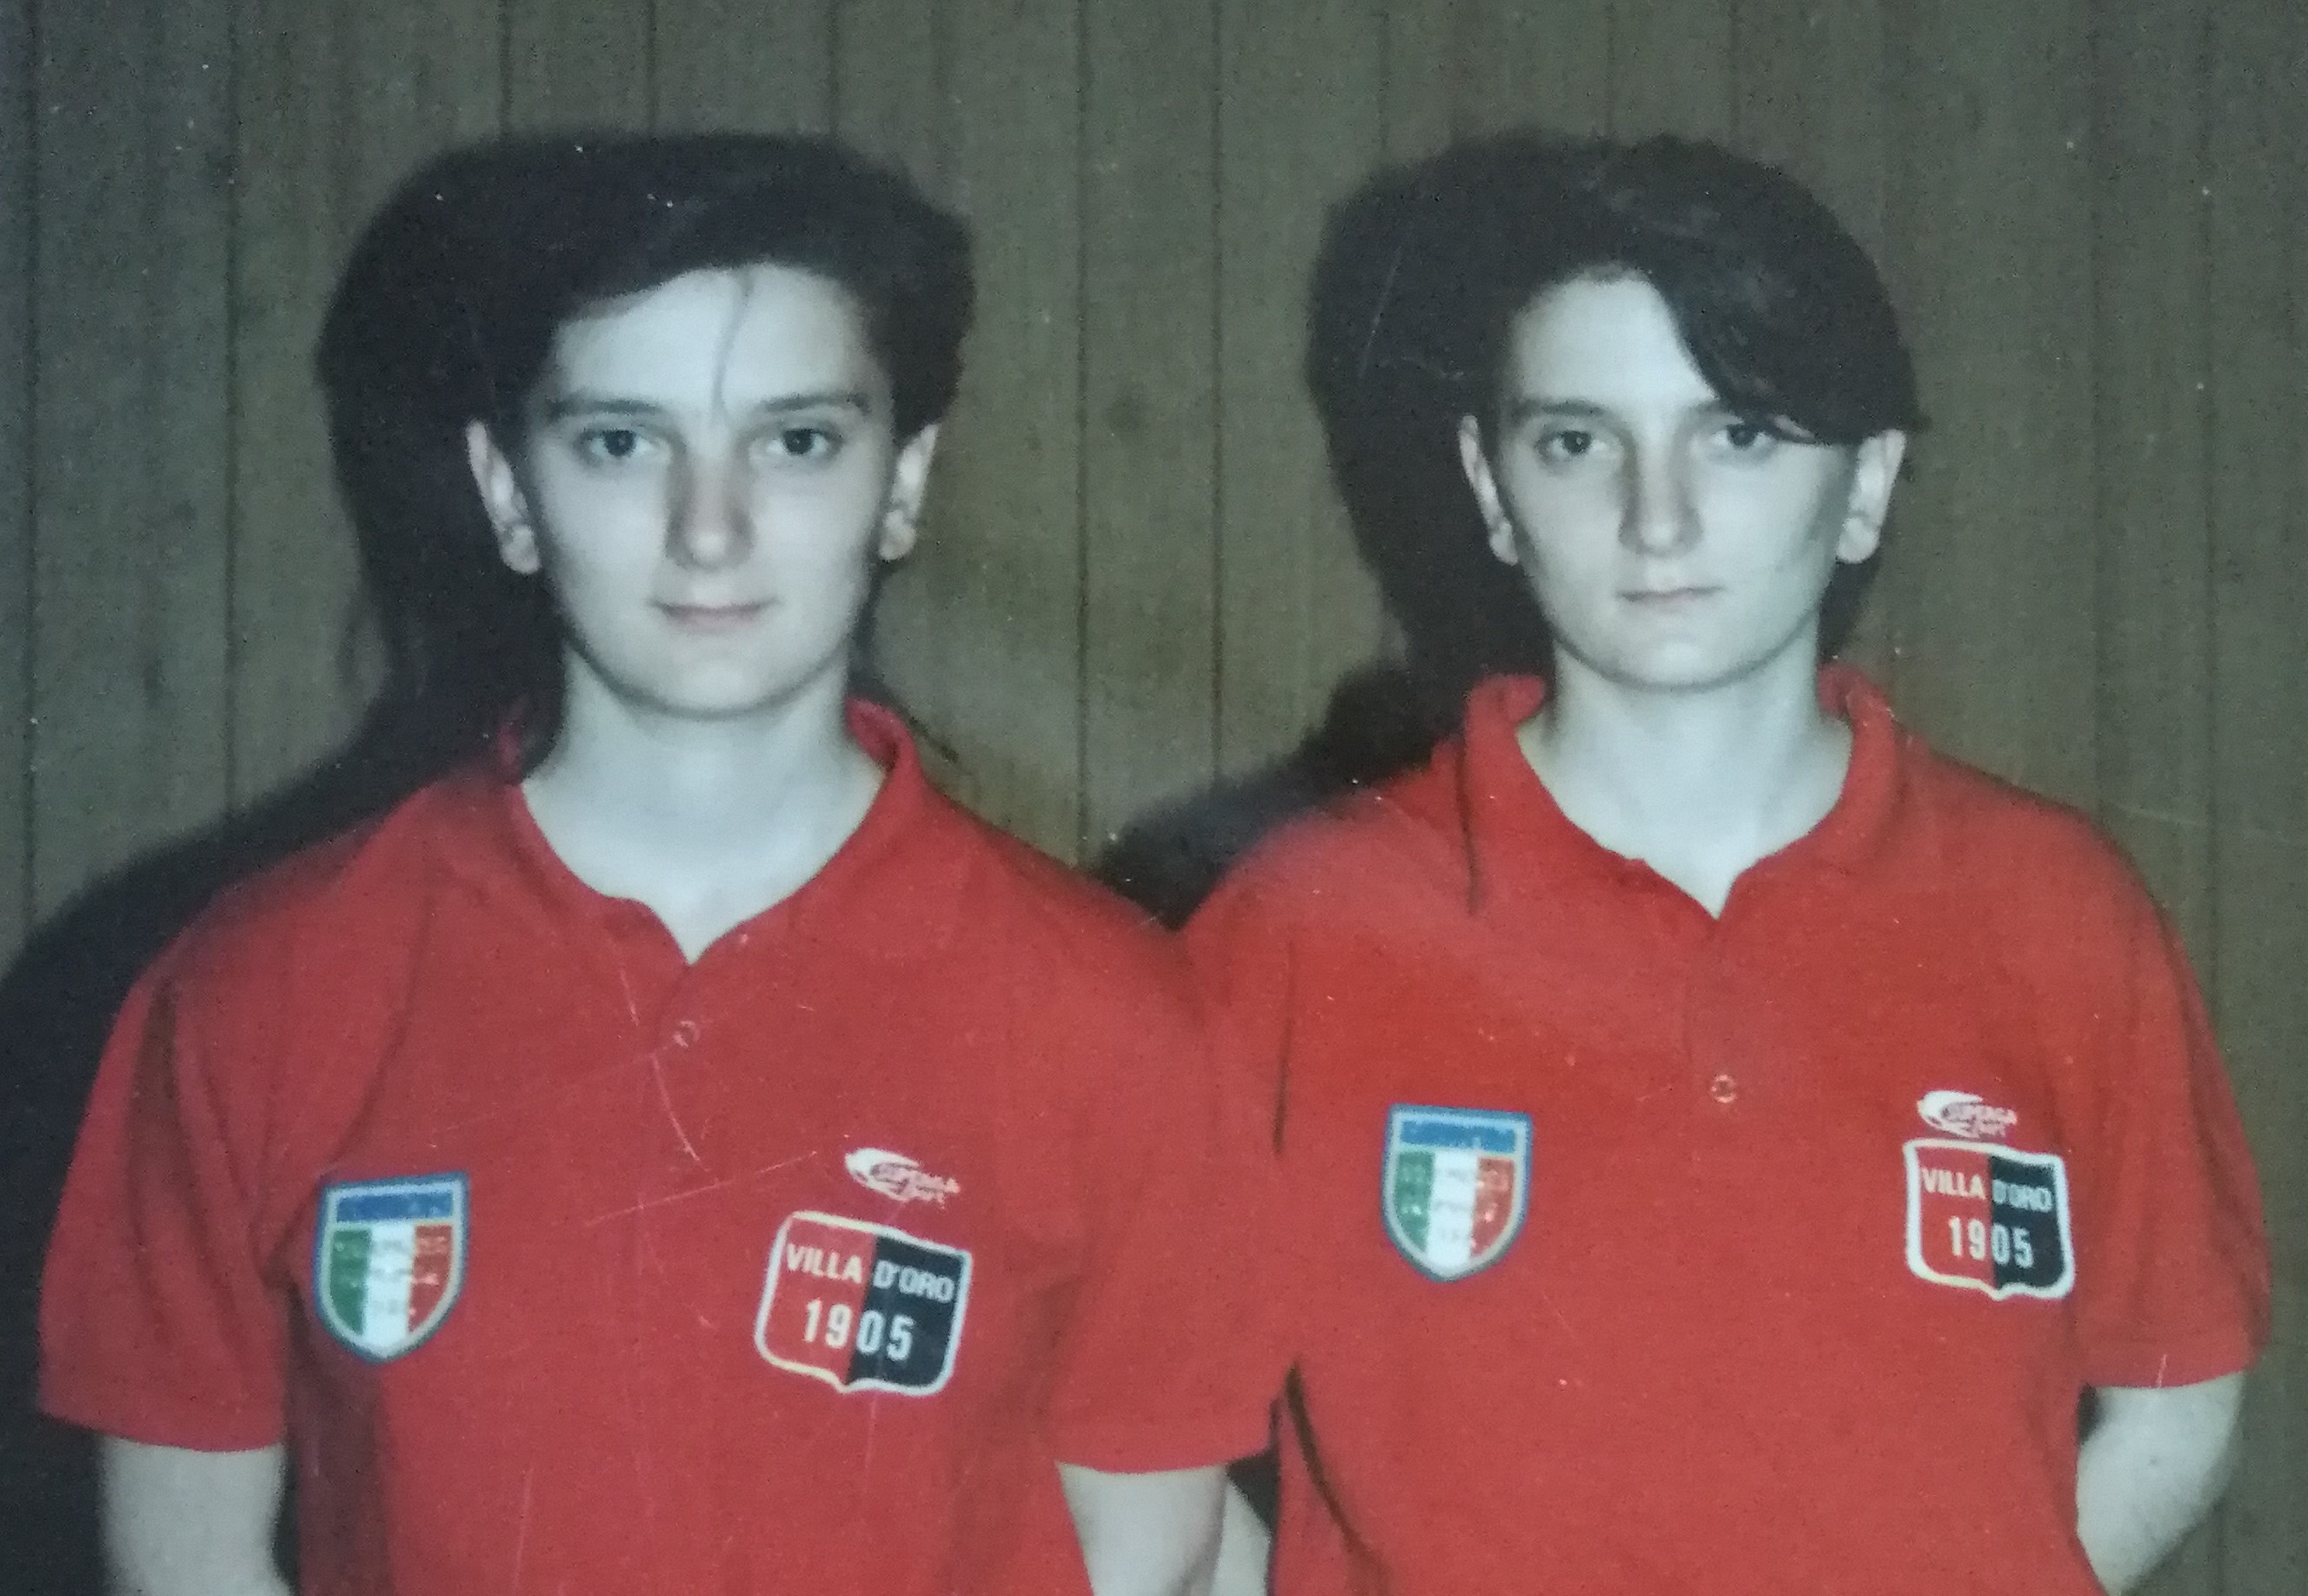 La squadra juniores Campione dItalia 1986